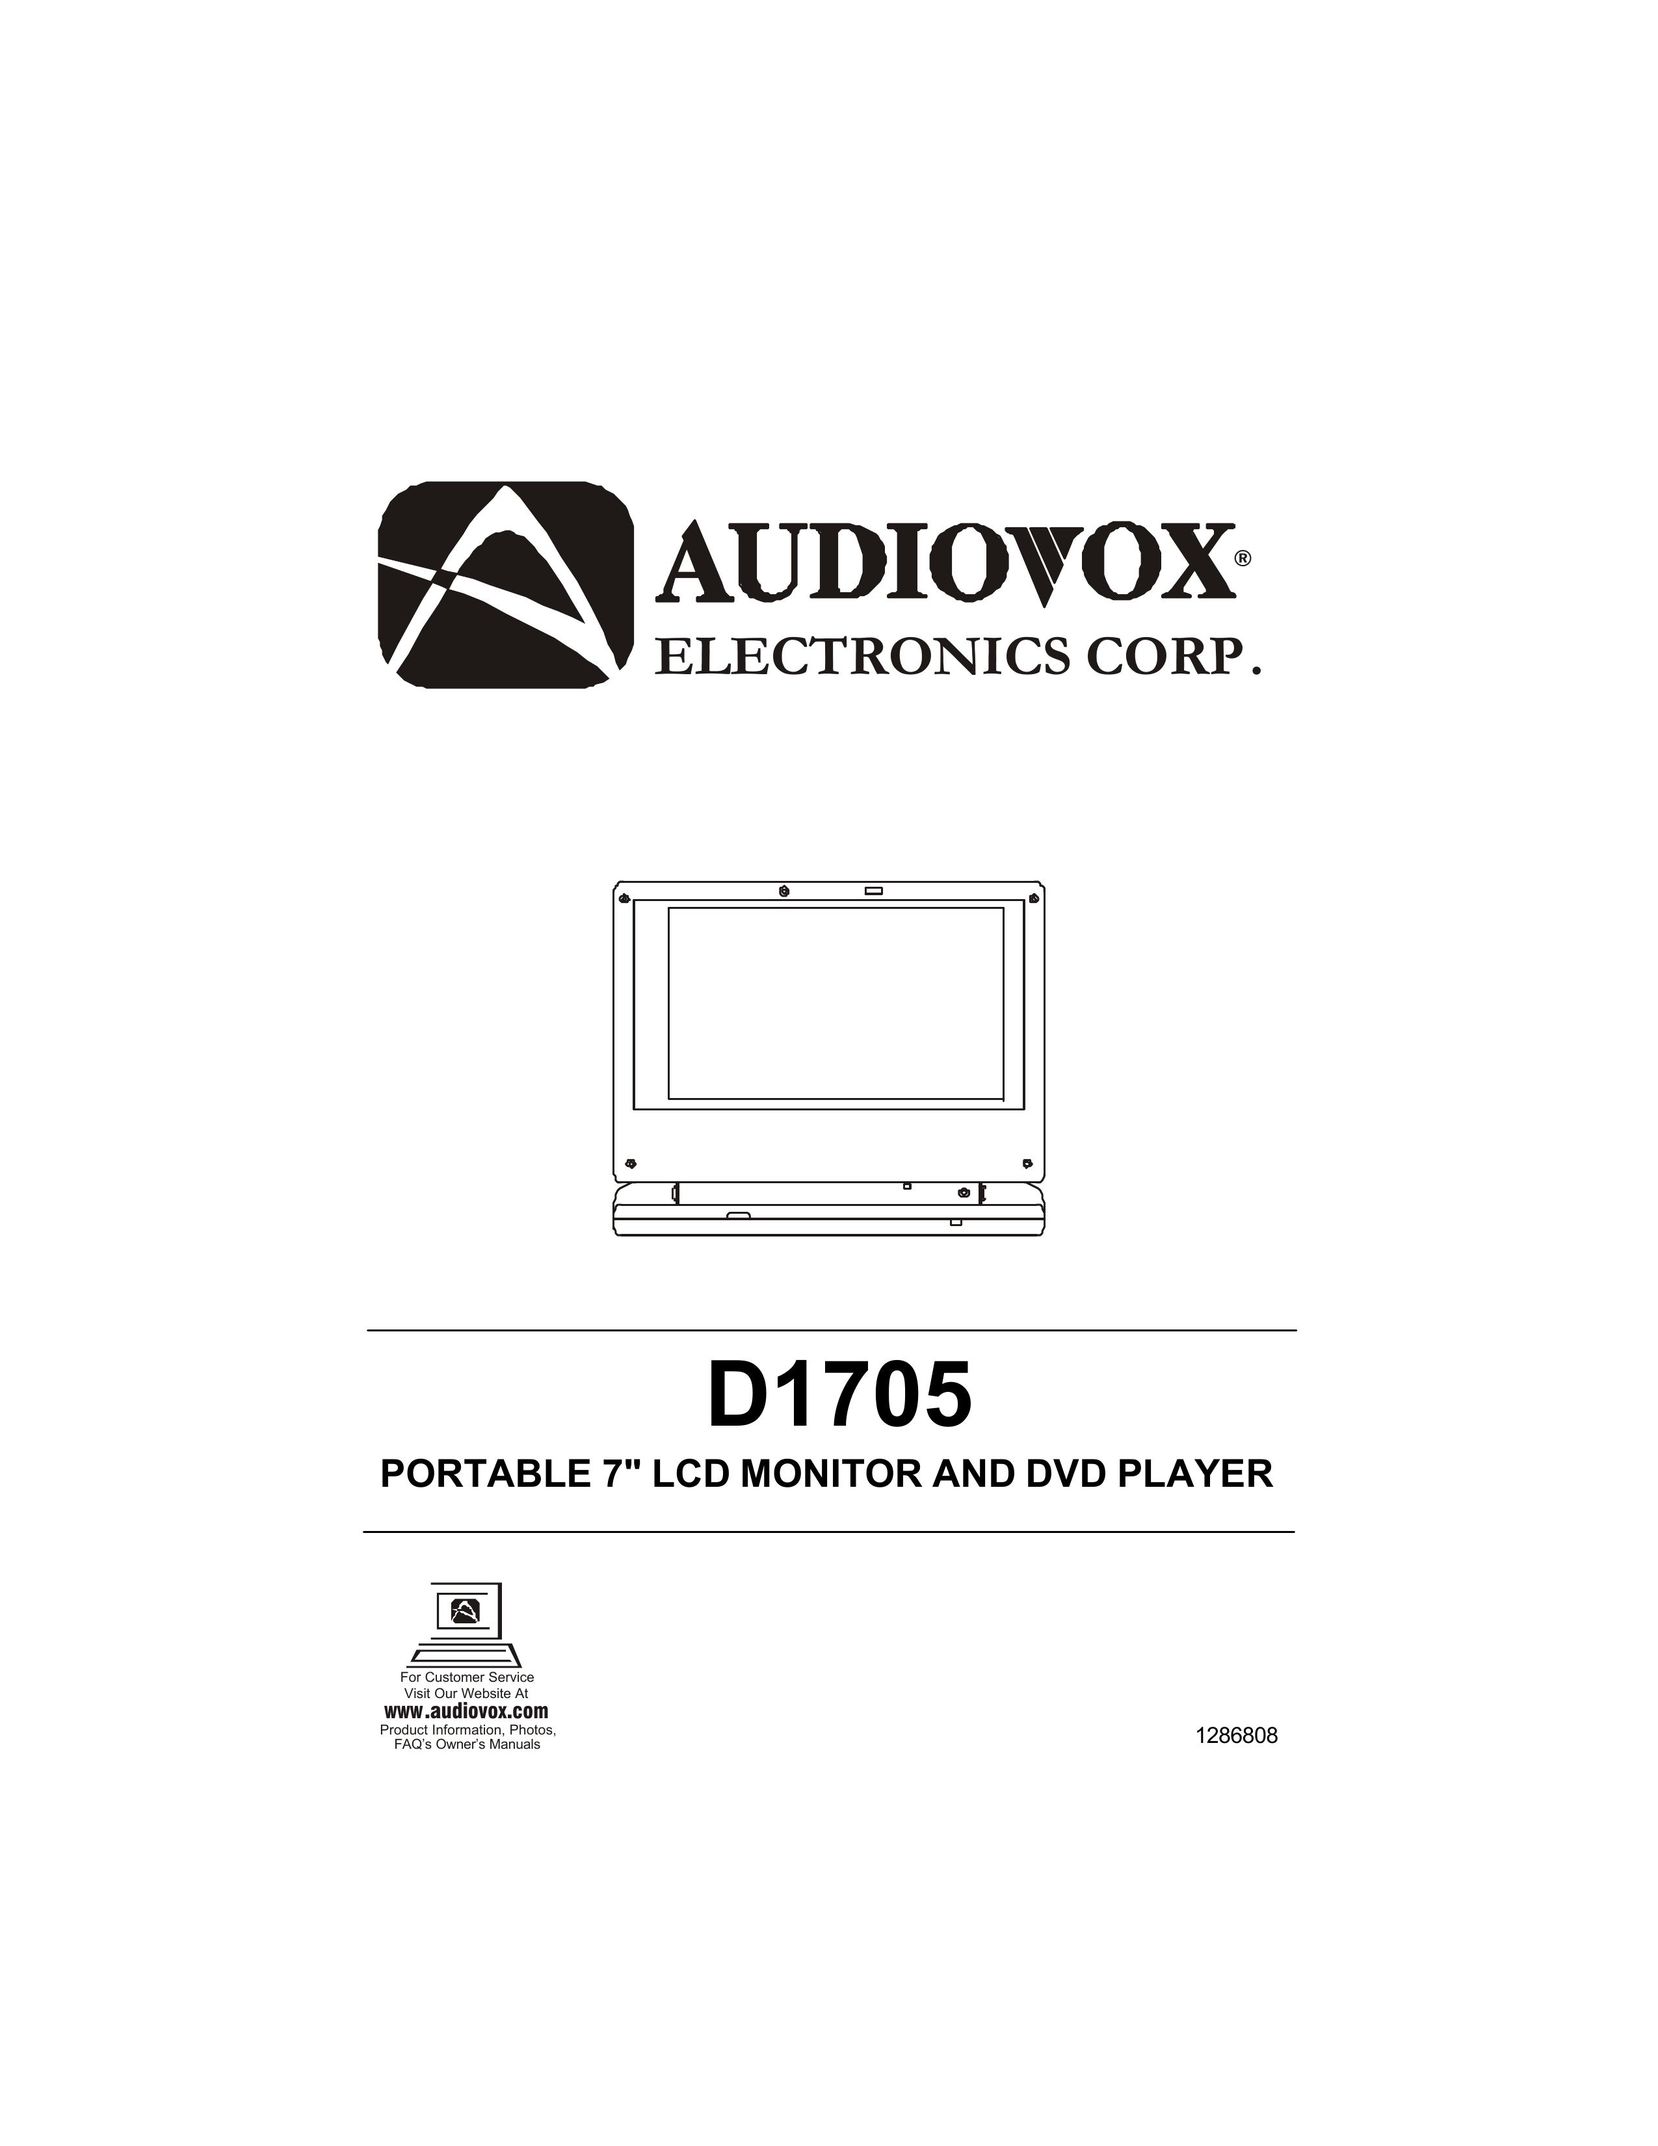 Audiovox D1705 Portable DVD Player User Manual